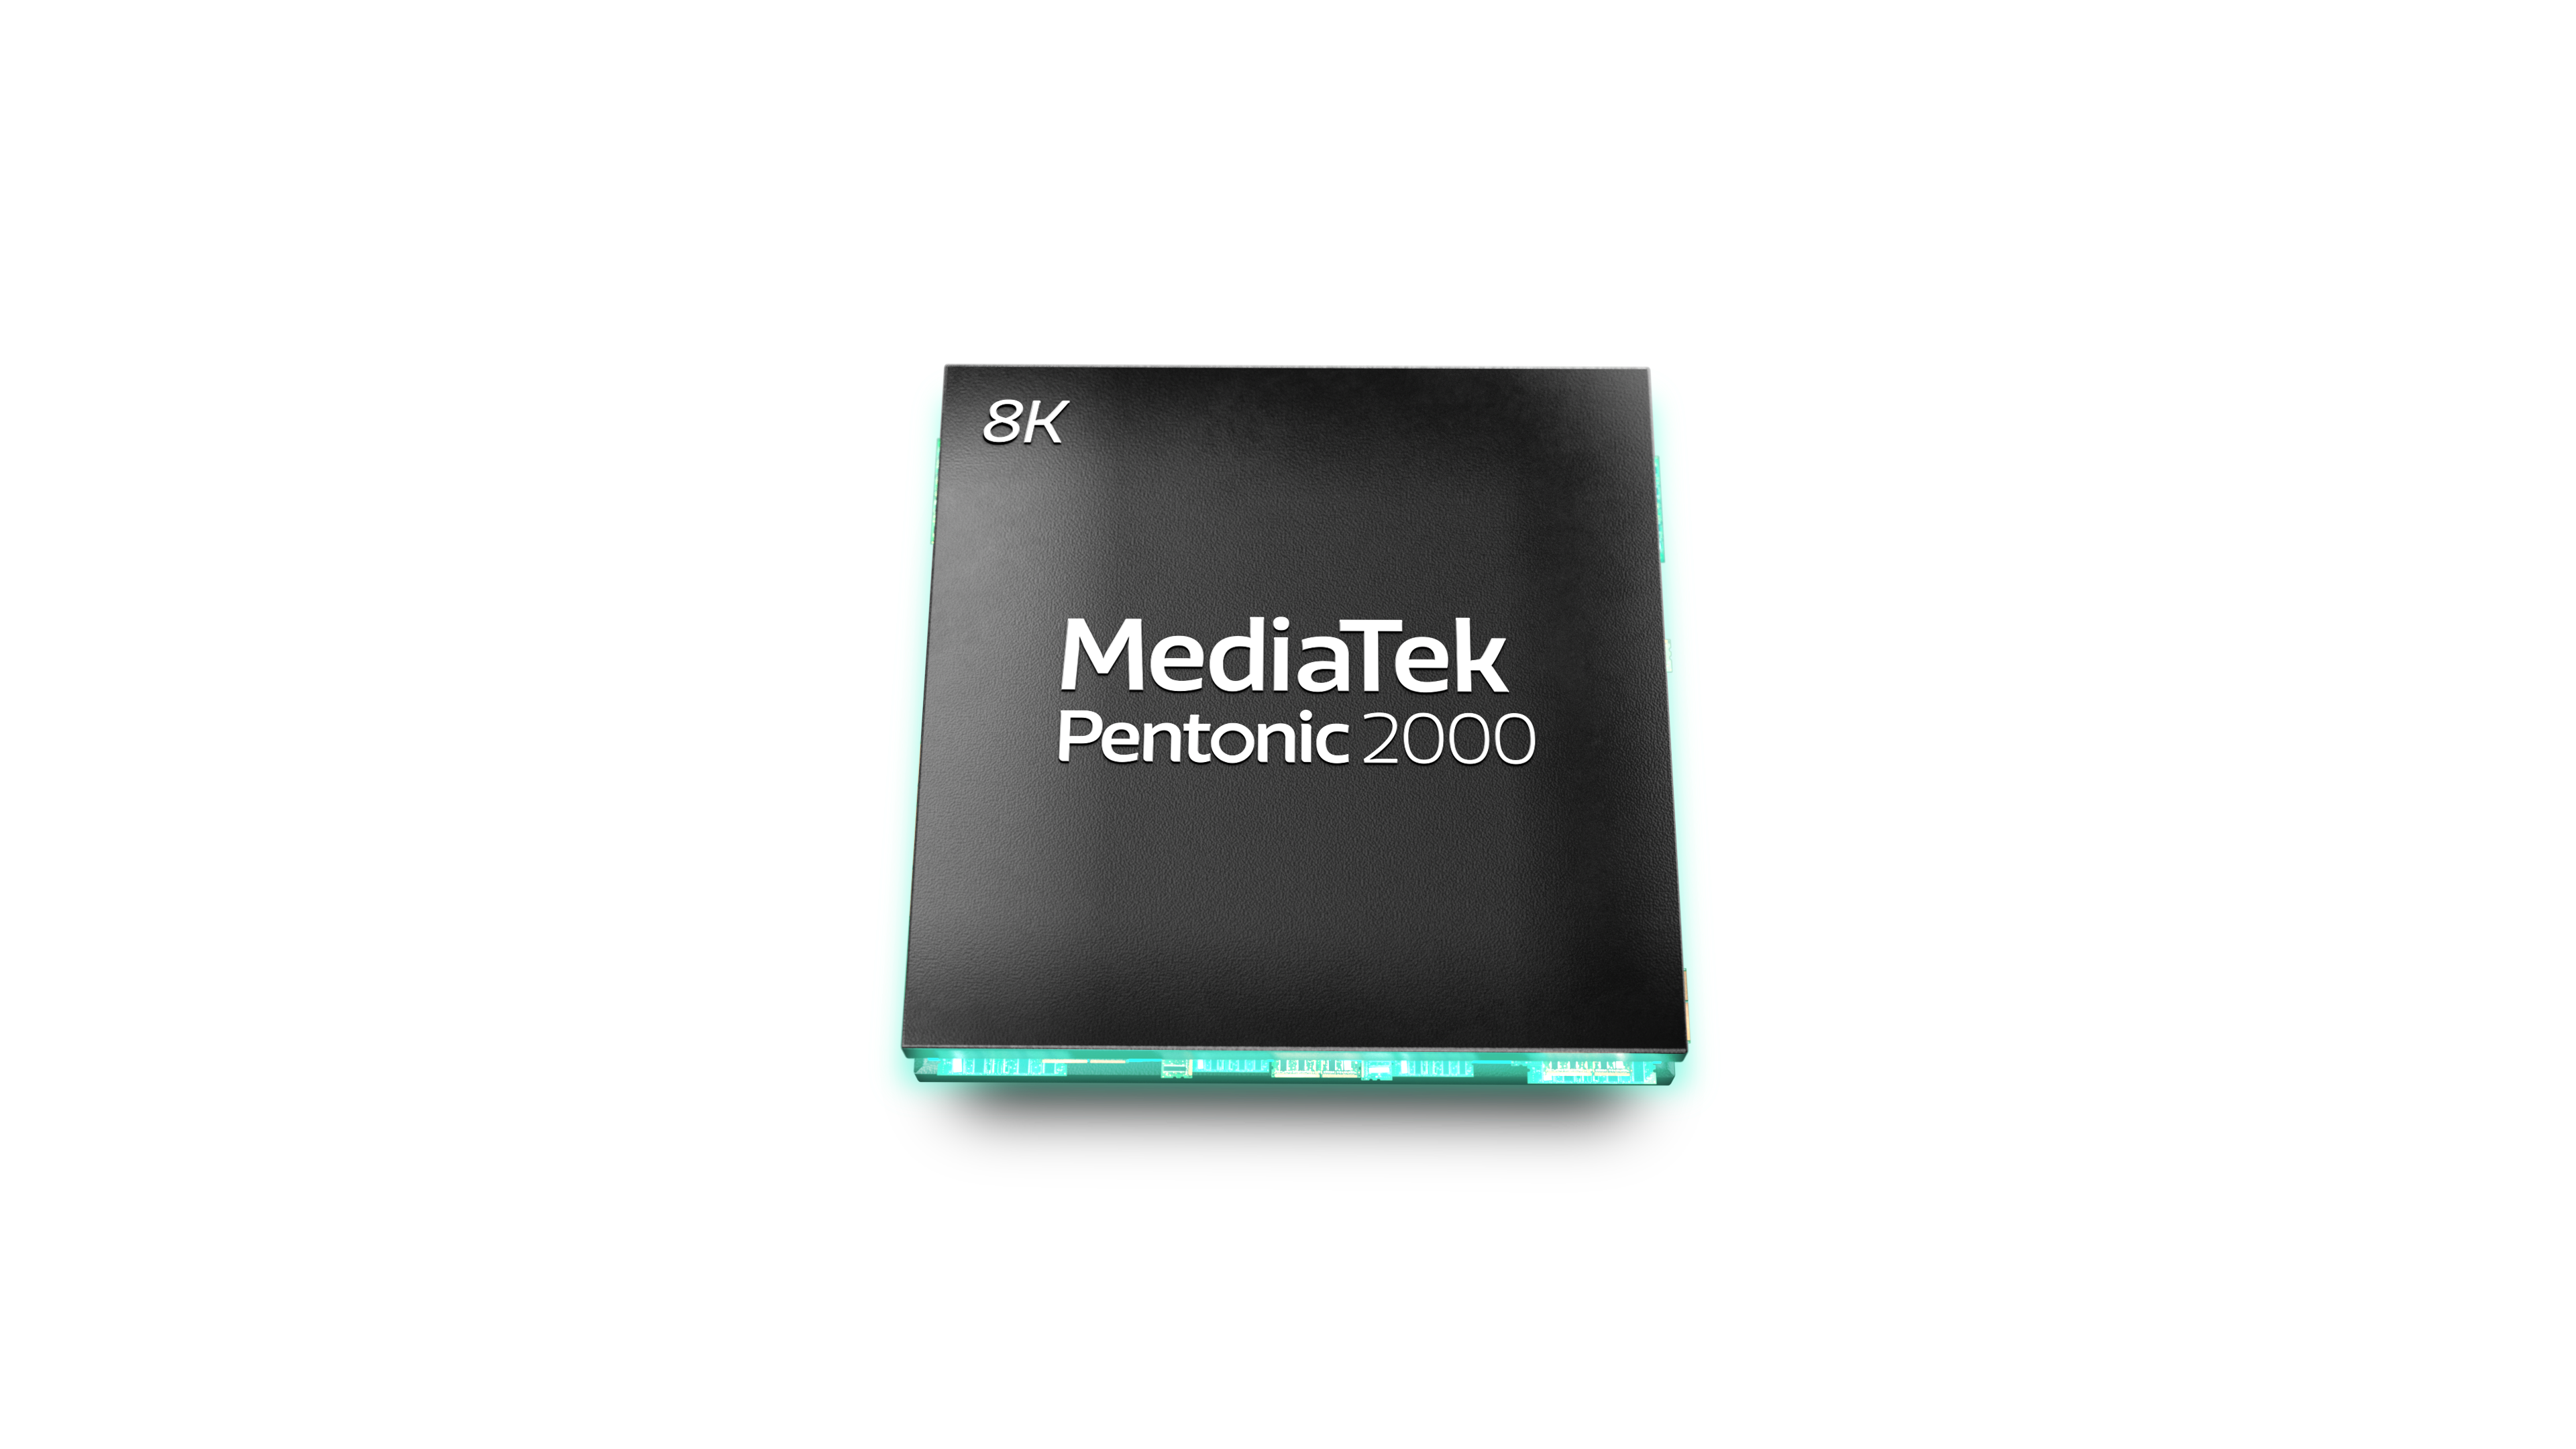 MediaTek dan TSMC Punya Chip untuk TV Digital, Pentonic 2000